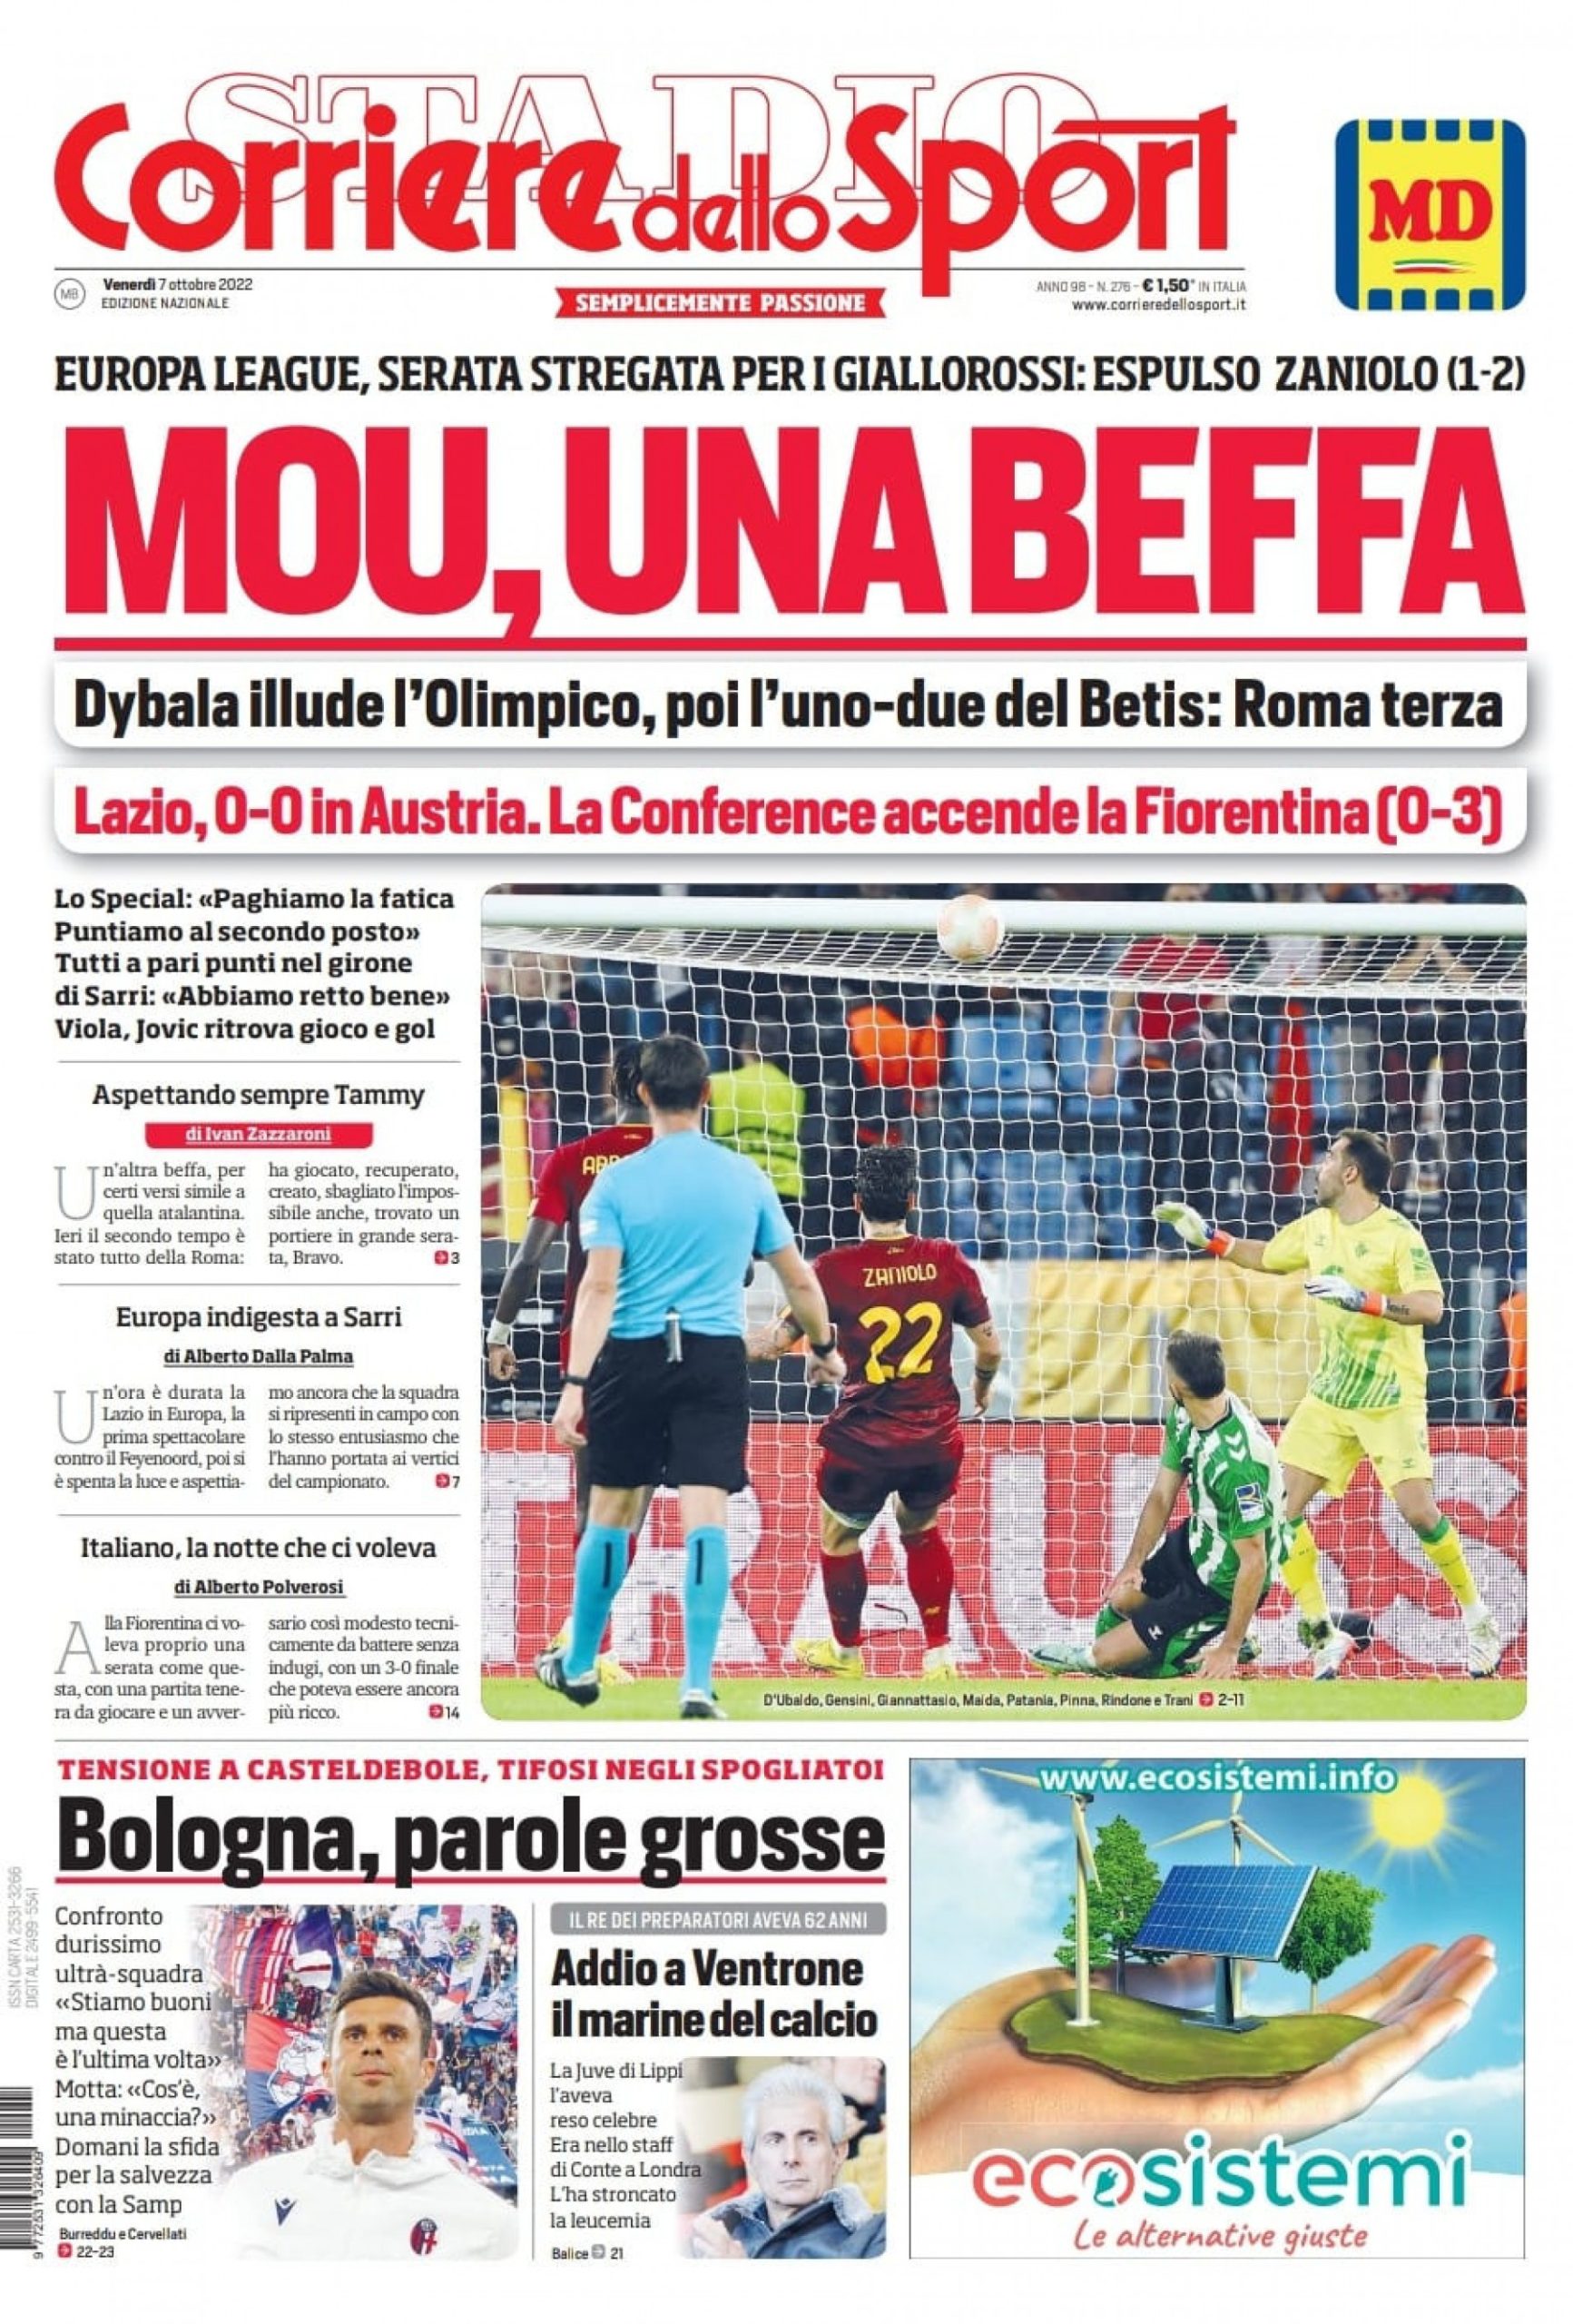 Today’s Papers – Inter comeback, Roma in trouble, Di Maria scare